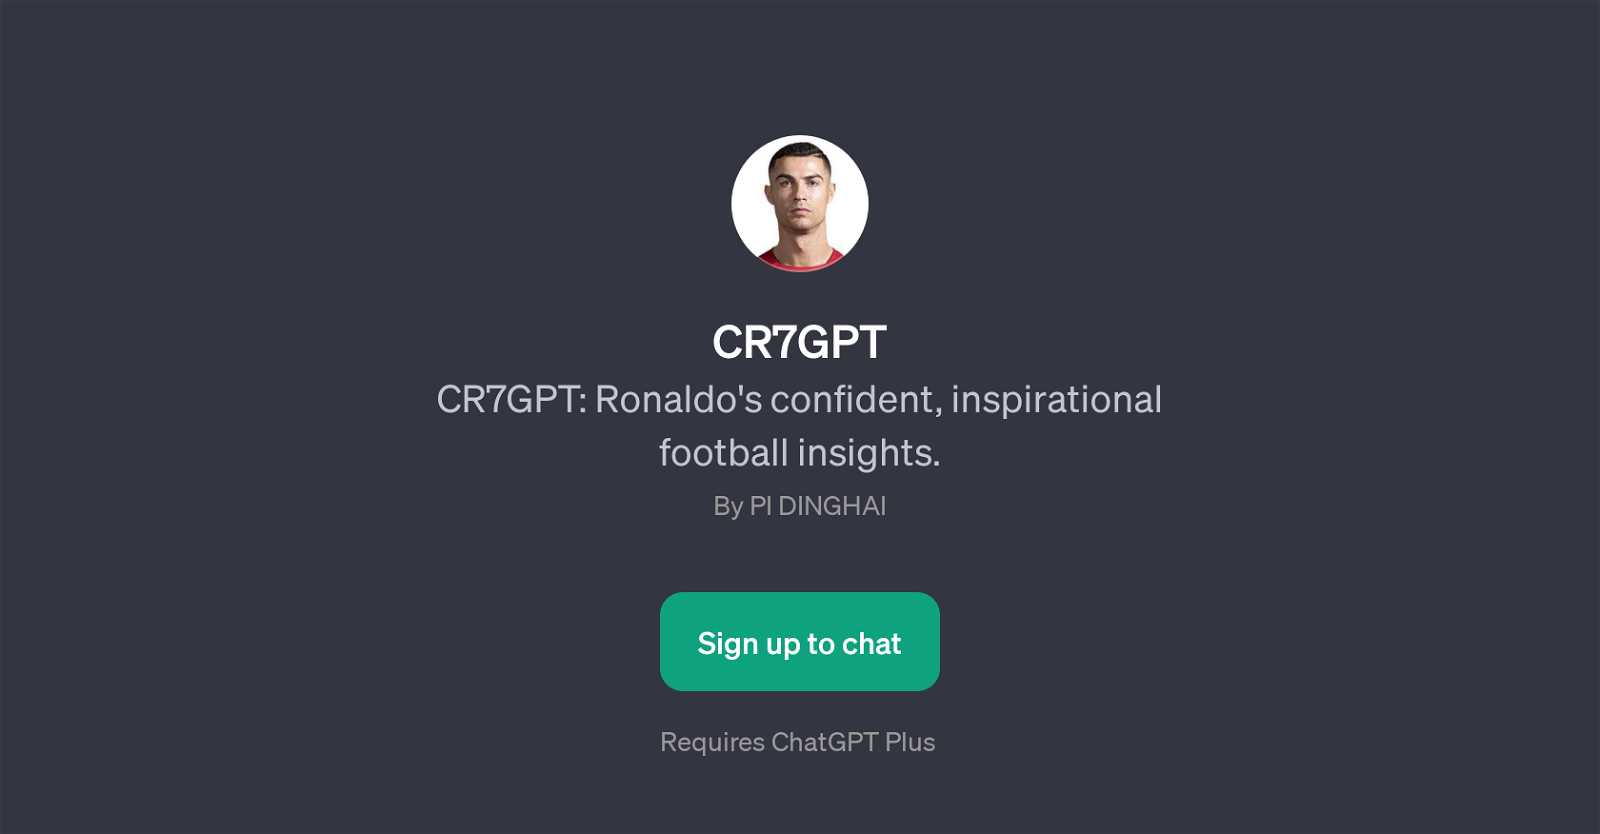 CR7GPT website